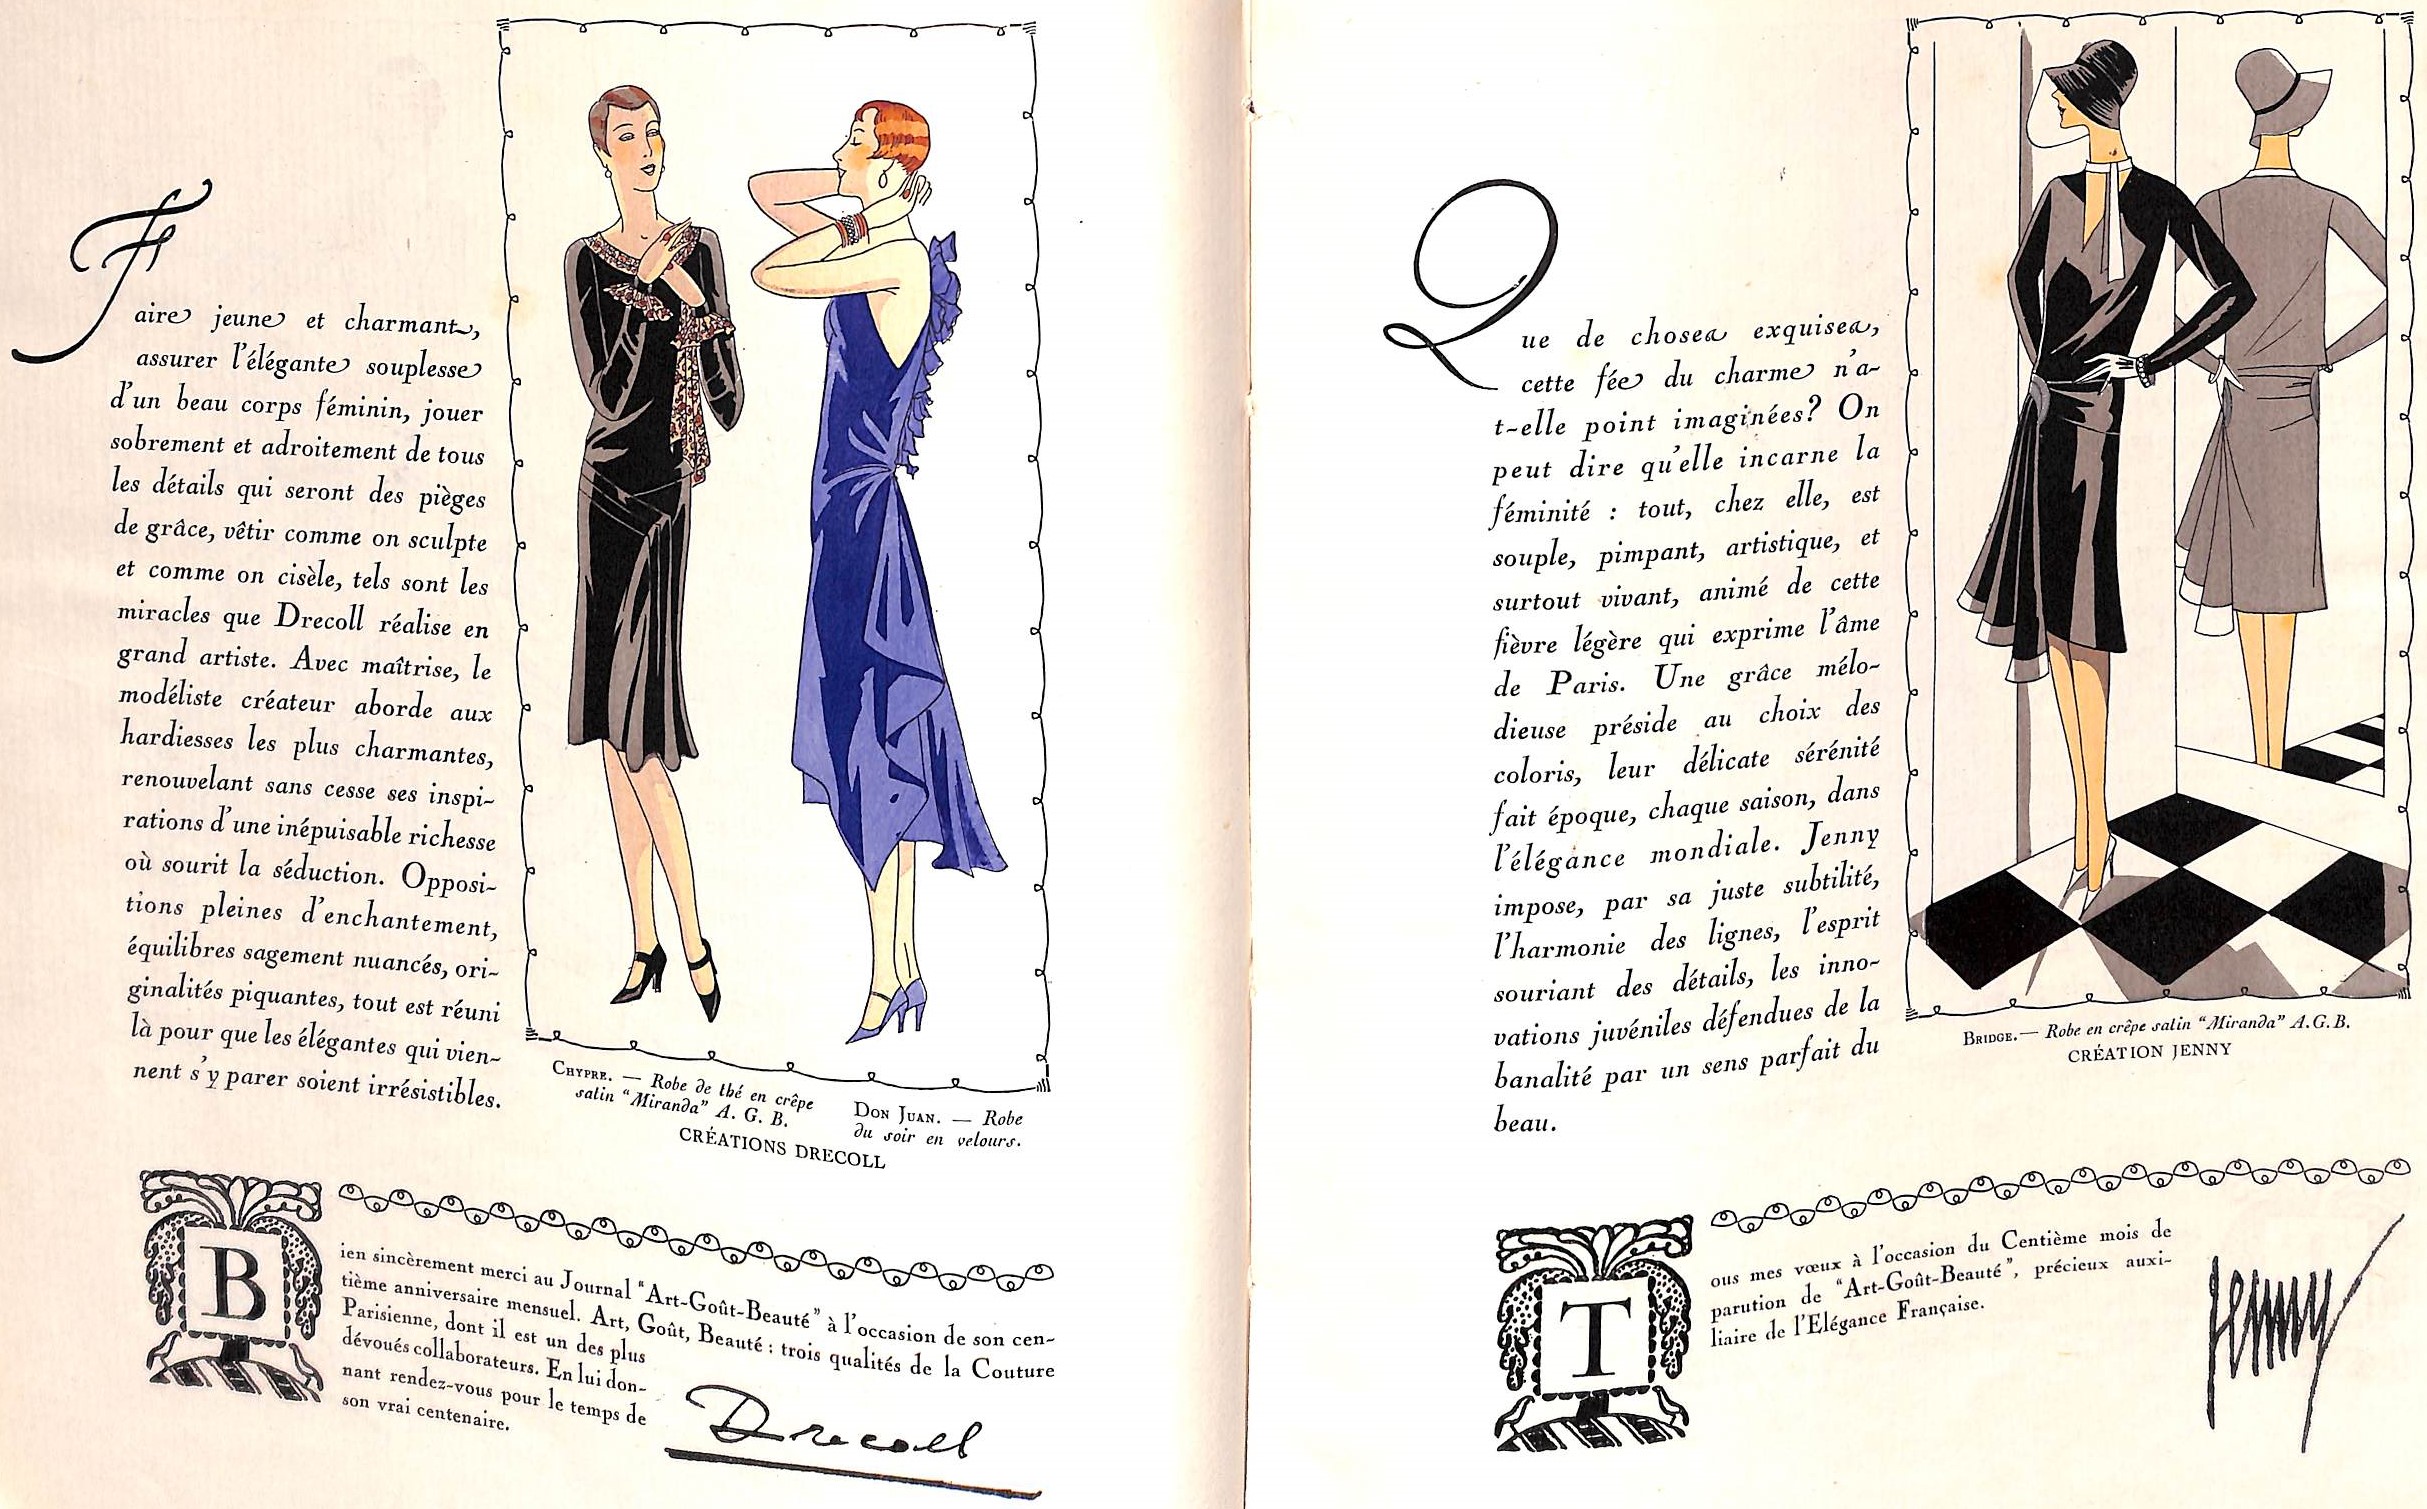 Art Gout Beaute: Feuillets De L'Elegance Feminine: Very Good Soft cover ...